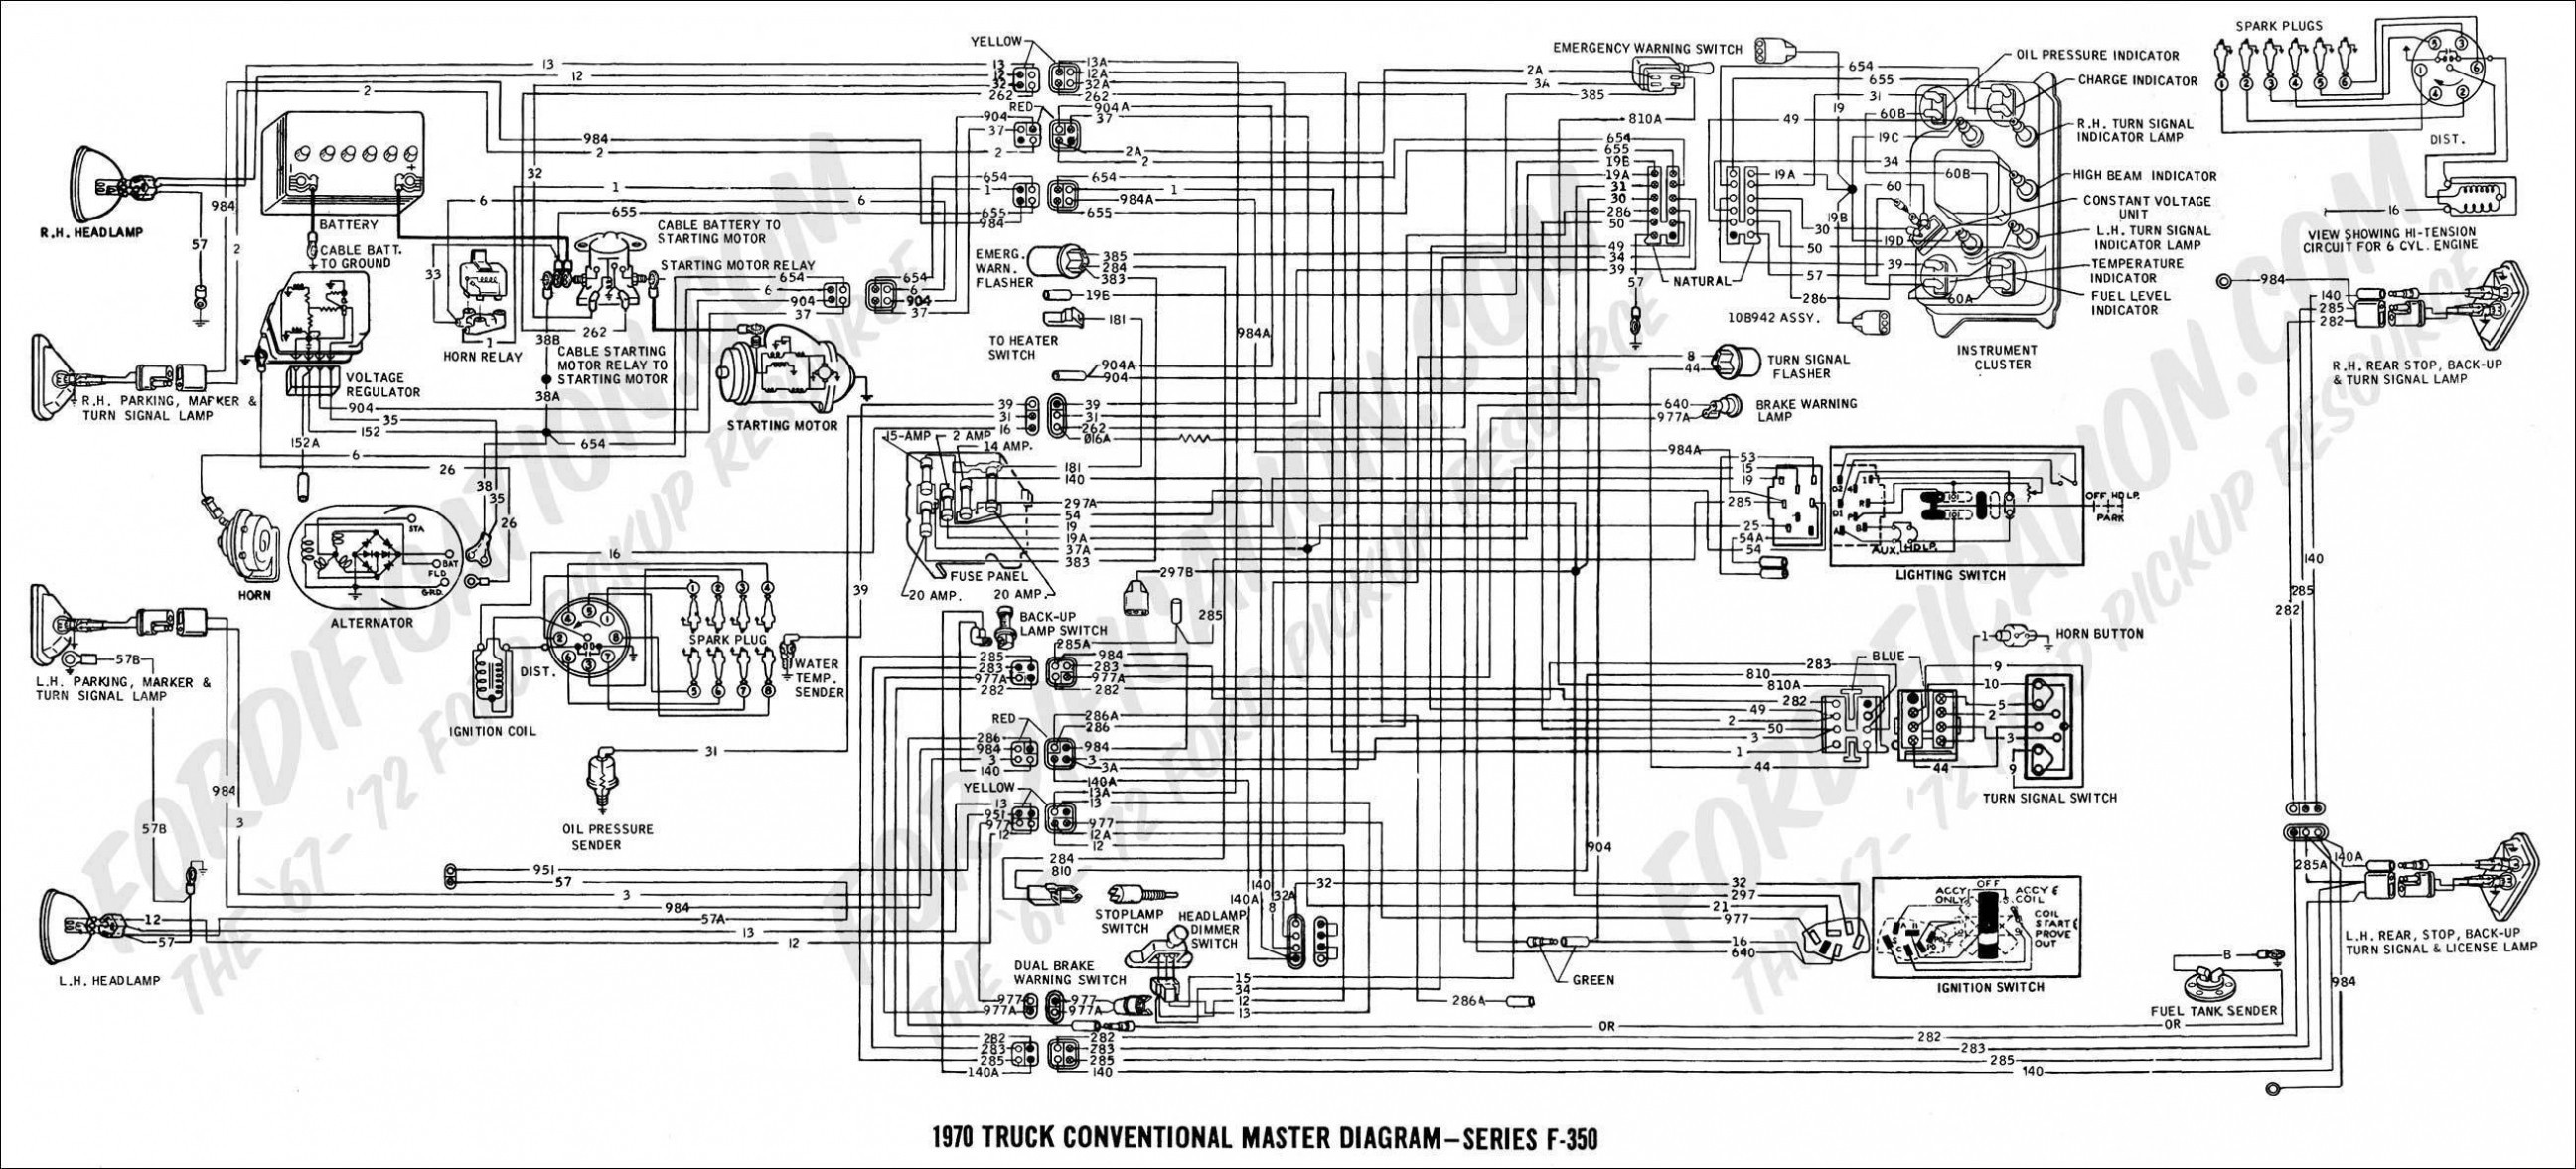 Ford E350 Parts Diagram 1986 ford E 350 Parts Diagram Wiring Diagram Options